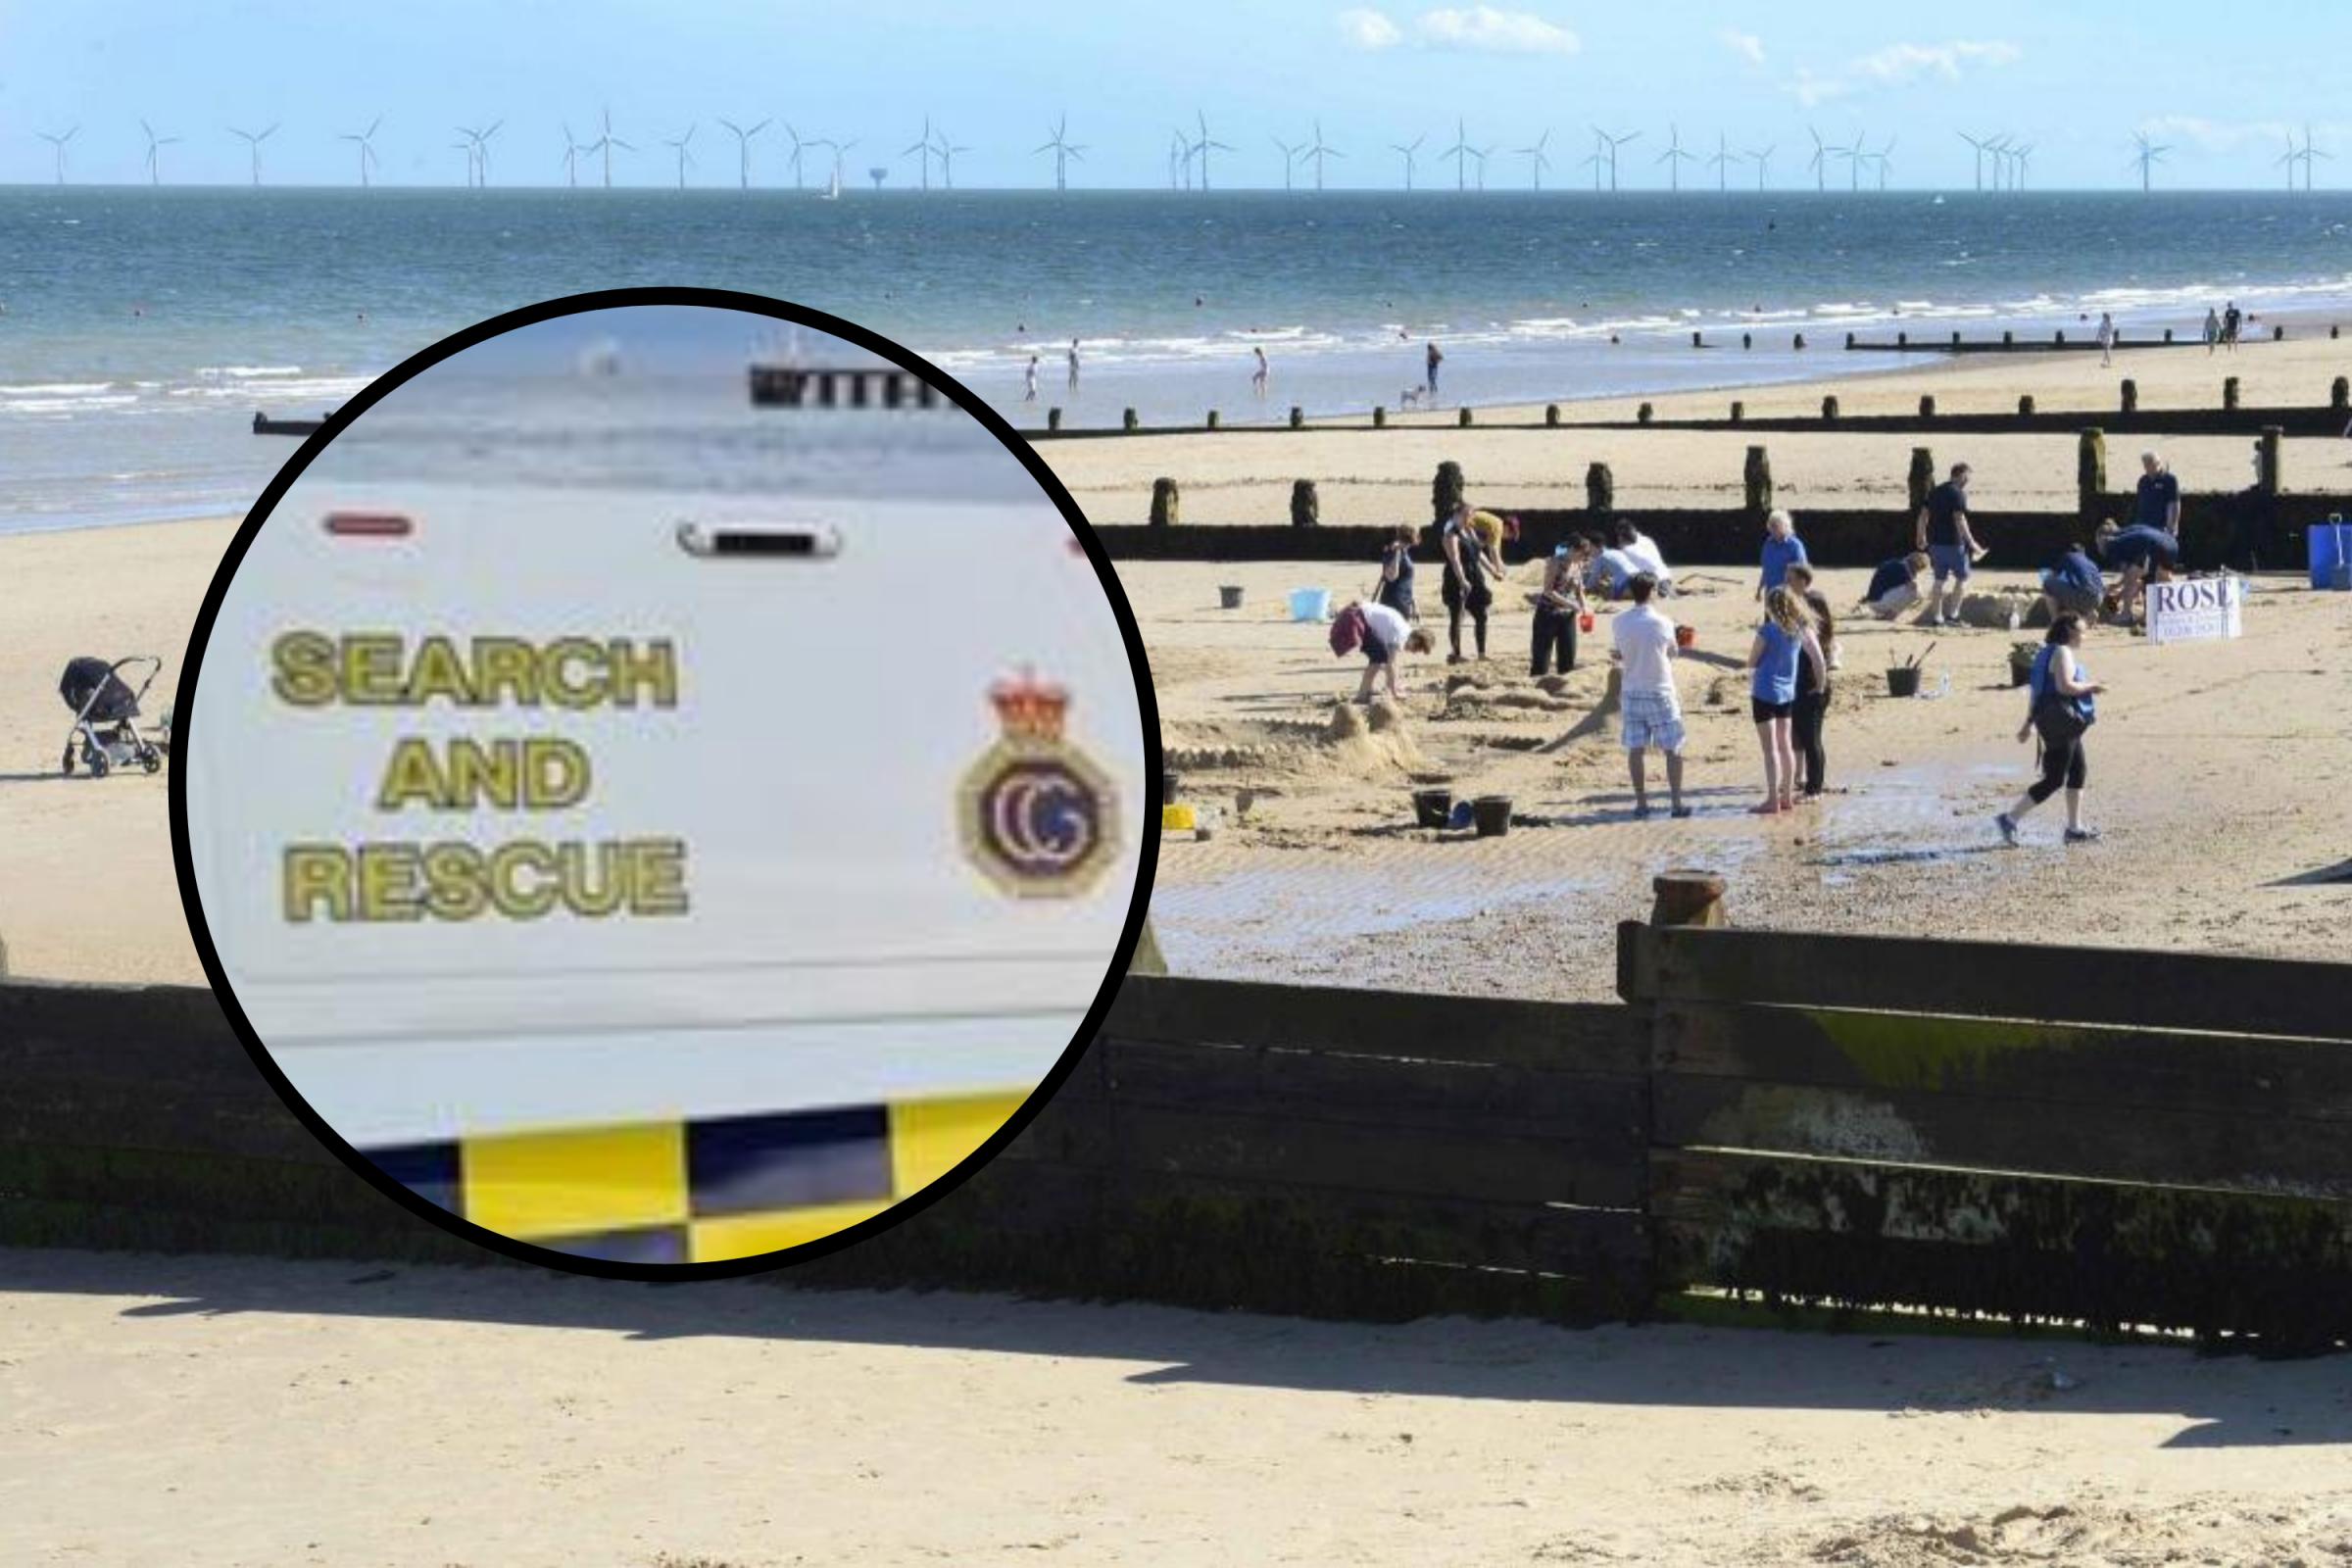 Young woman found semi-conscious on Frinton beach taken to hospital